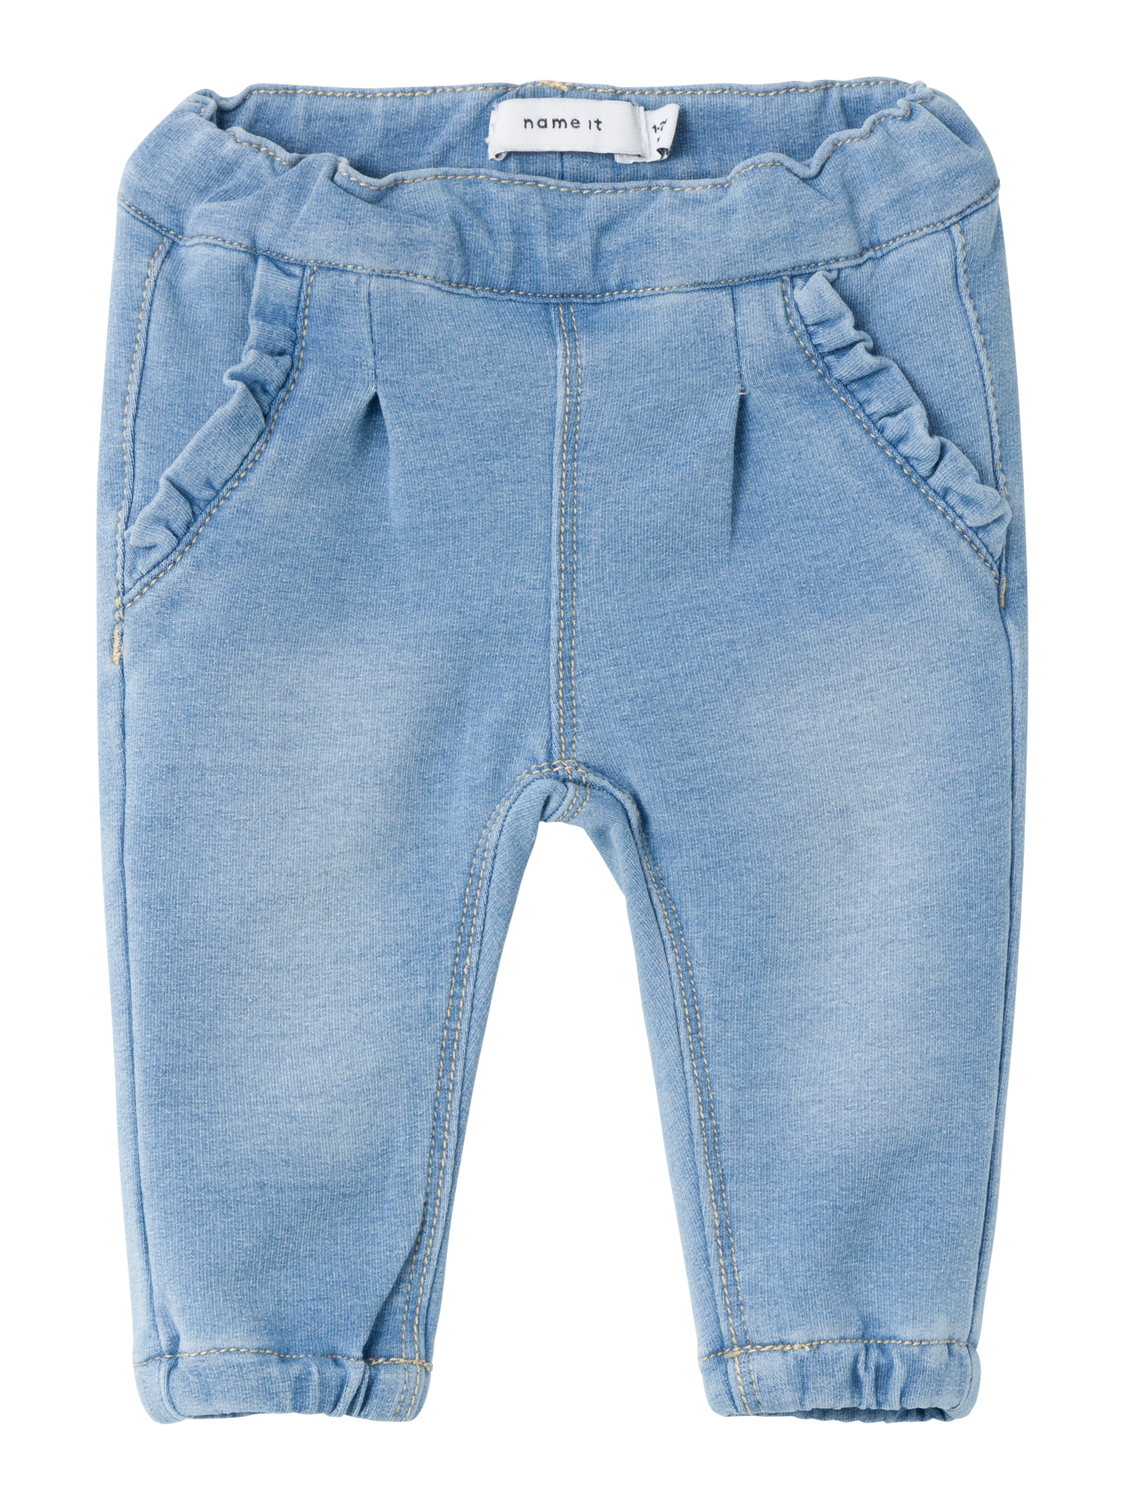 NBFBELLA Jeans - Light Blue Denim